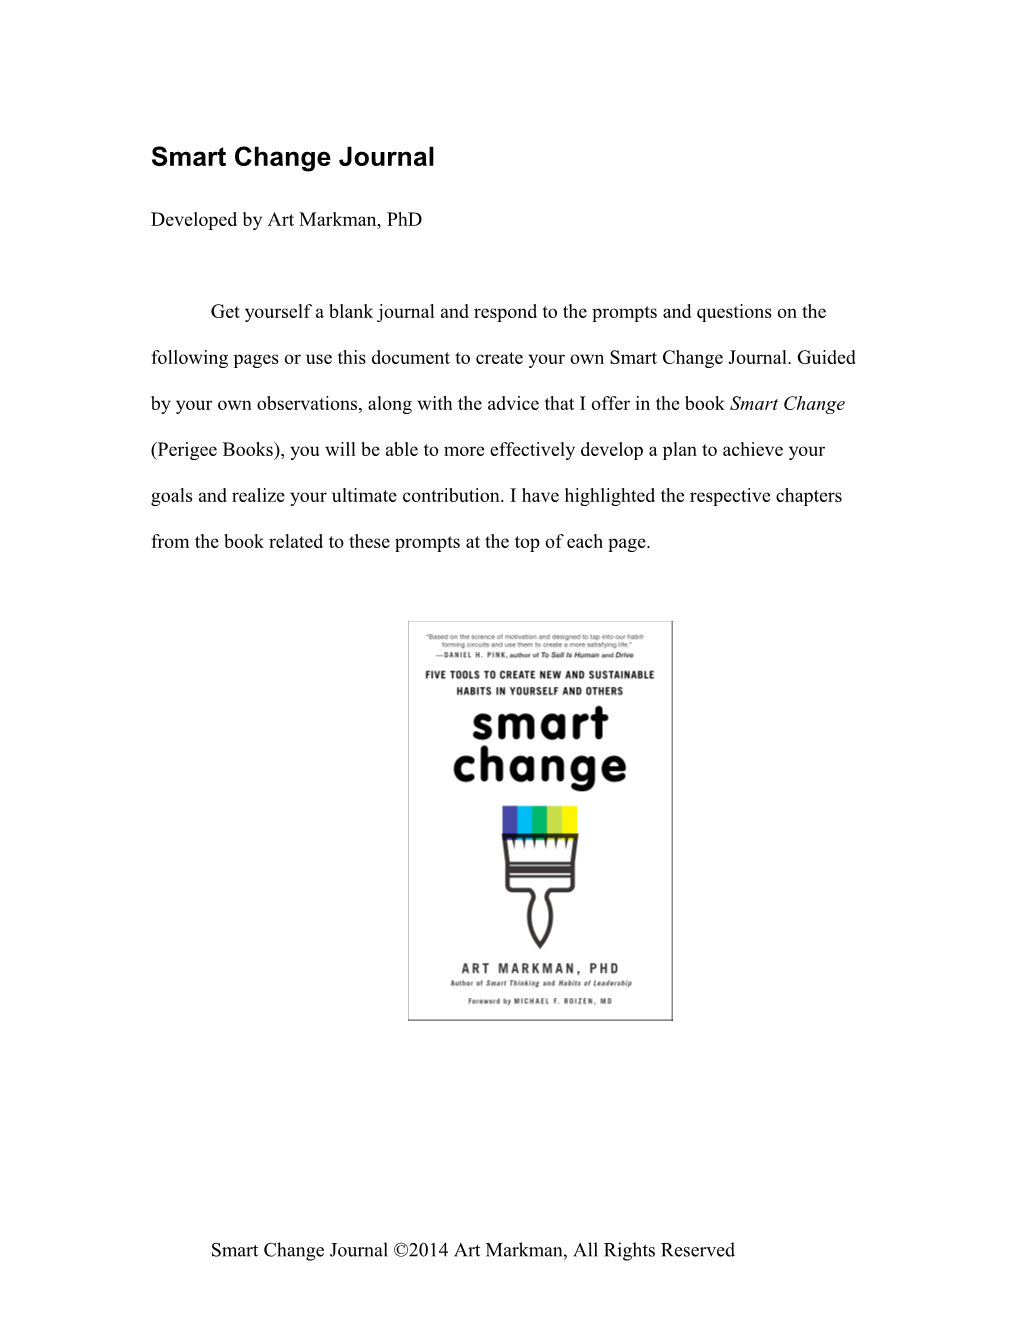 Appendix: the Smart Change Journal